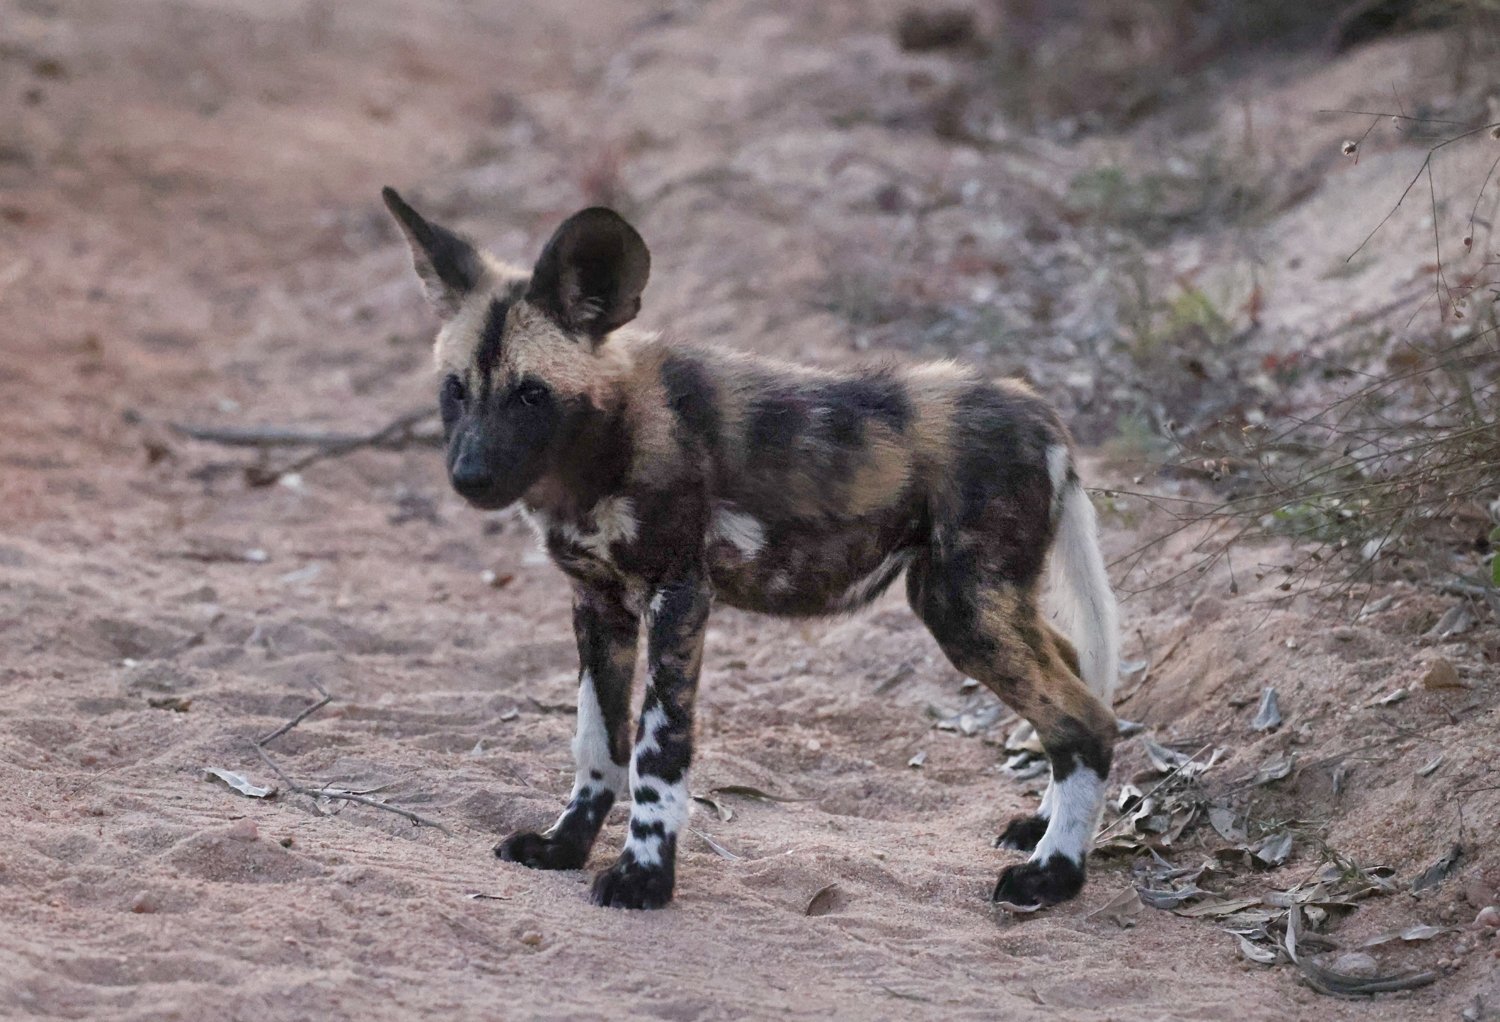 South-africa_Kruger_Pretoriuskop_jay-knight_african-wild-dog-pup_cute-1.jpg